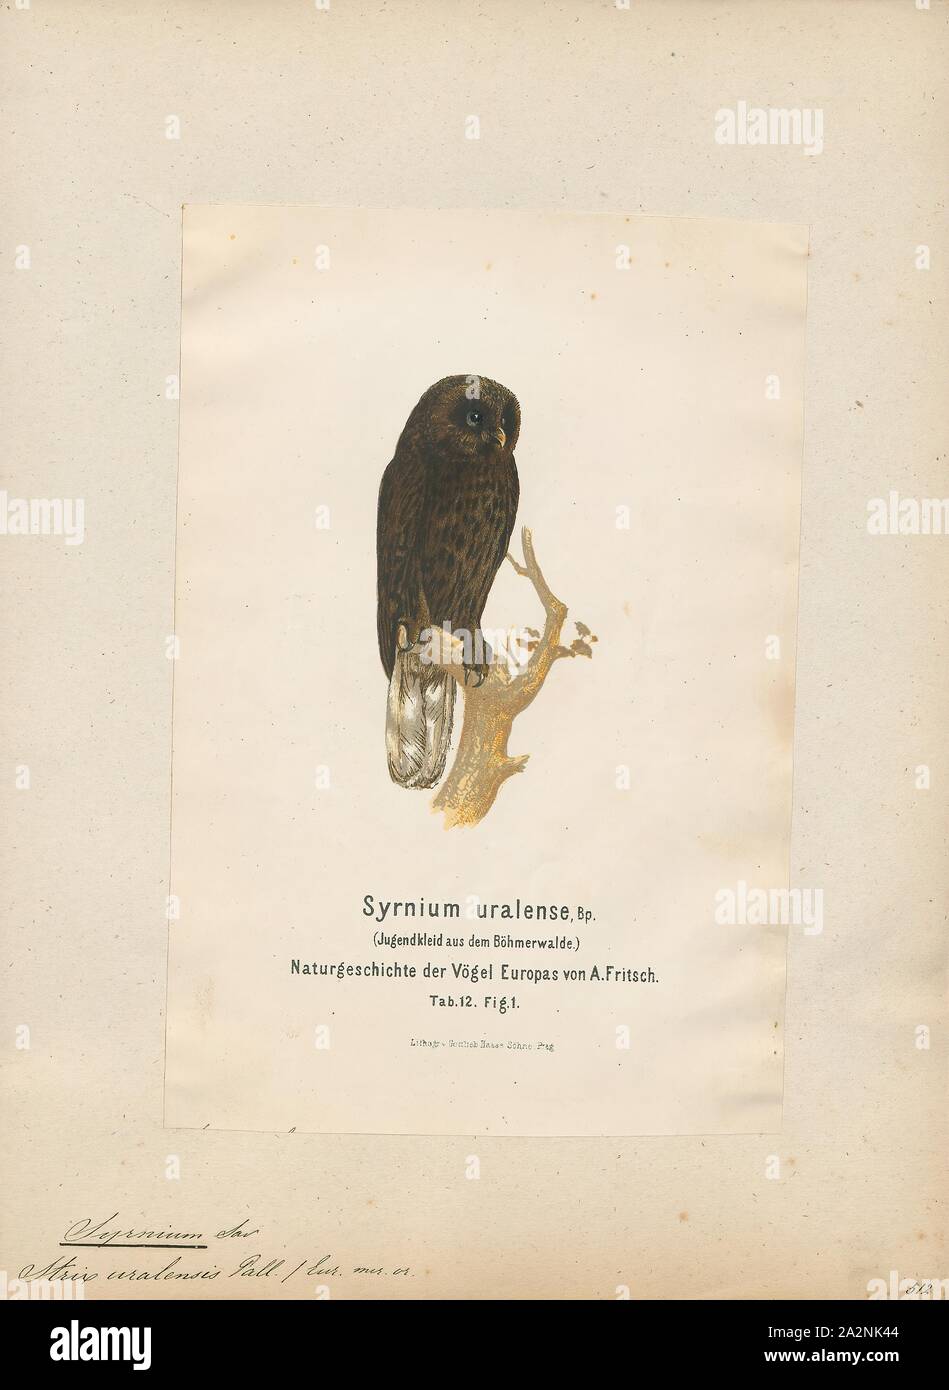 Syrnium uralense, Print, 1870-1871 Stock Photo